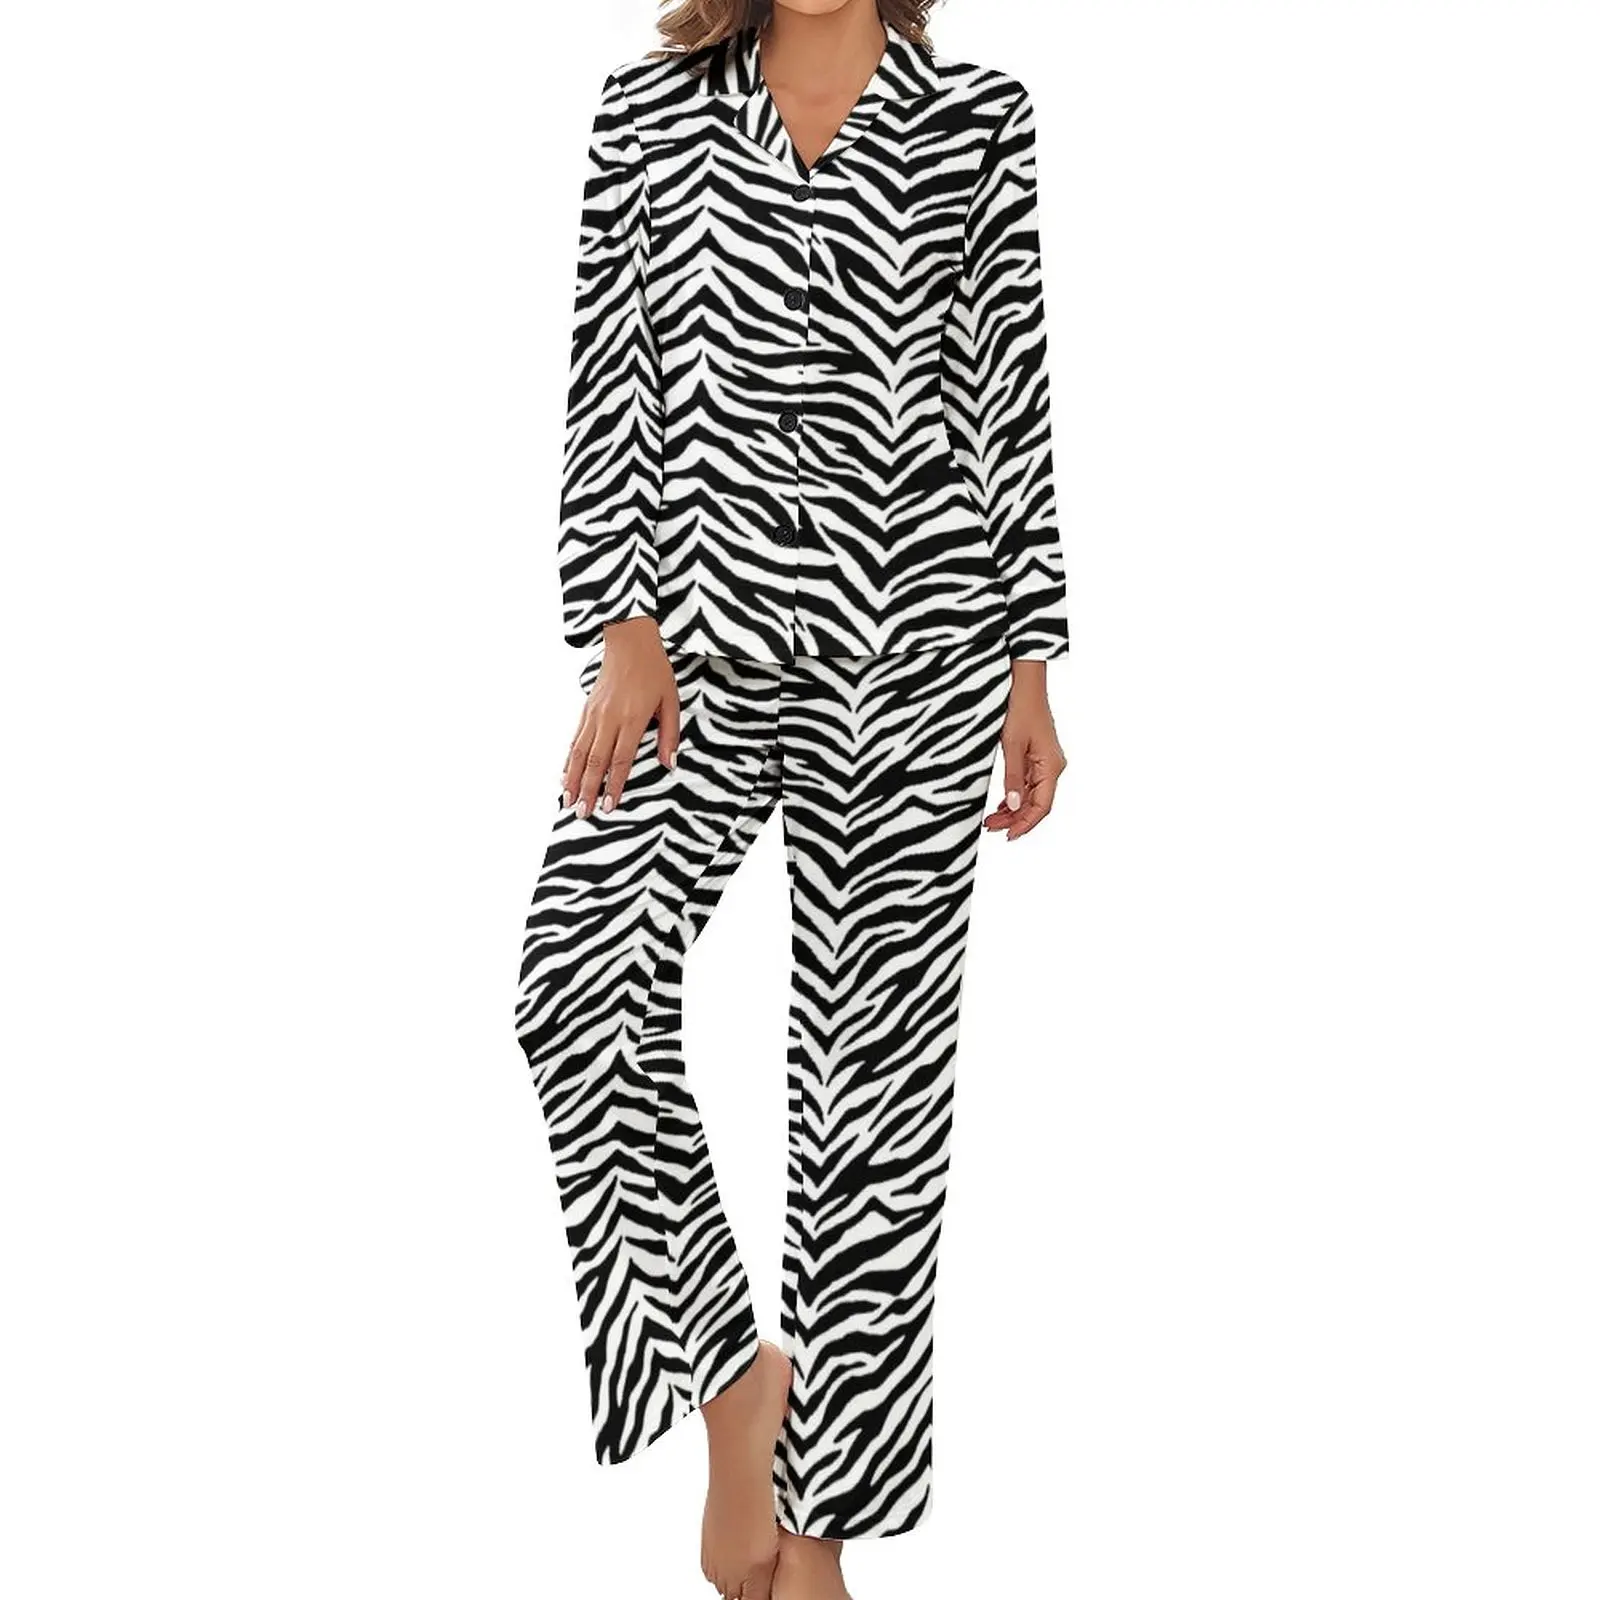 

Zebra Print Pajamas White And Black Stripes Long-Sleeve Kawaii Pajama Sets 2 Piece Room Spring Graphic Nightwear Gift